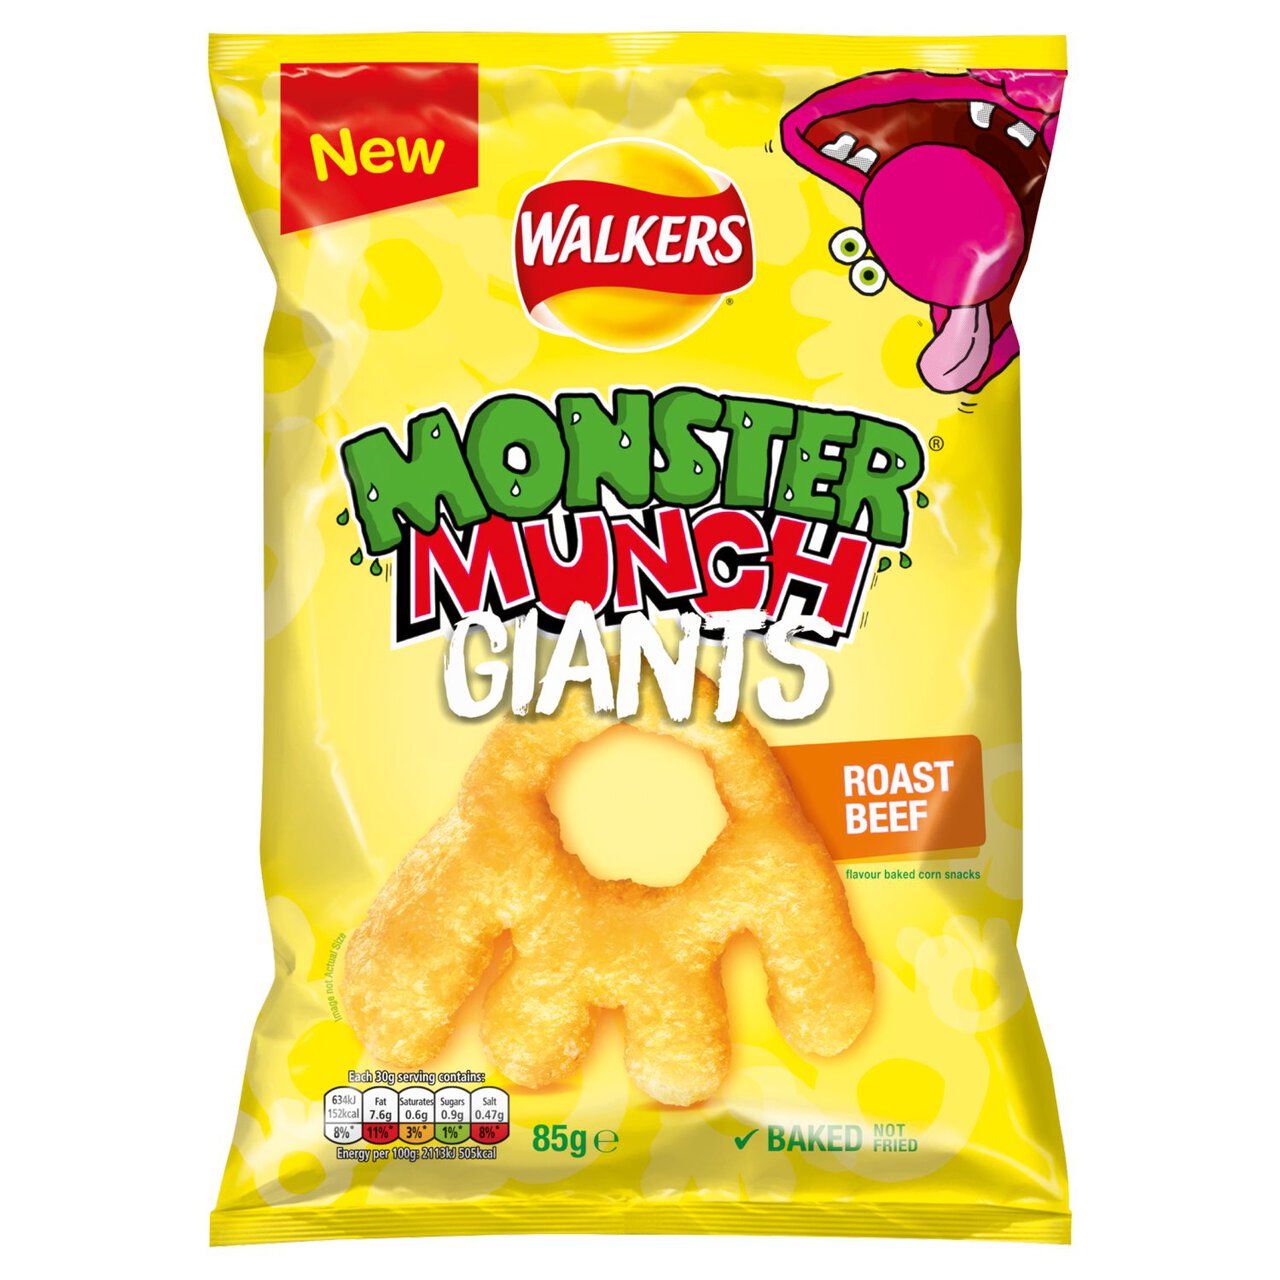 Walkers Monster Munch Giants Roast Beef Sharing Bag Snacks 85g